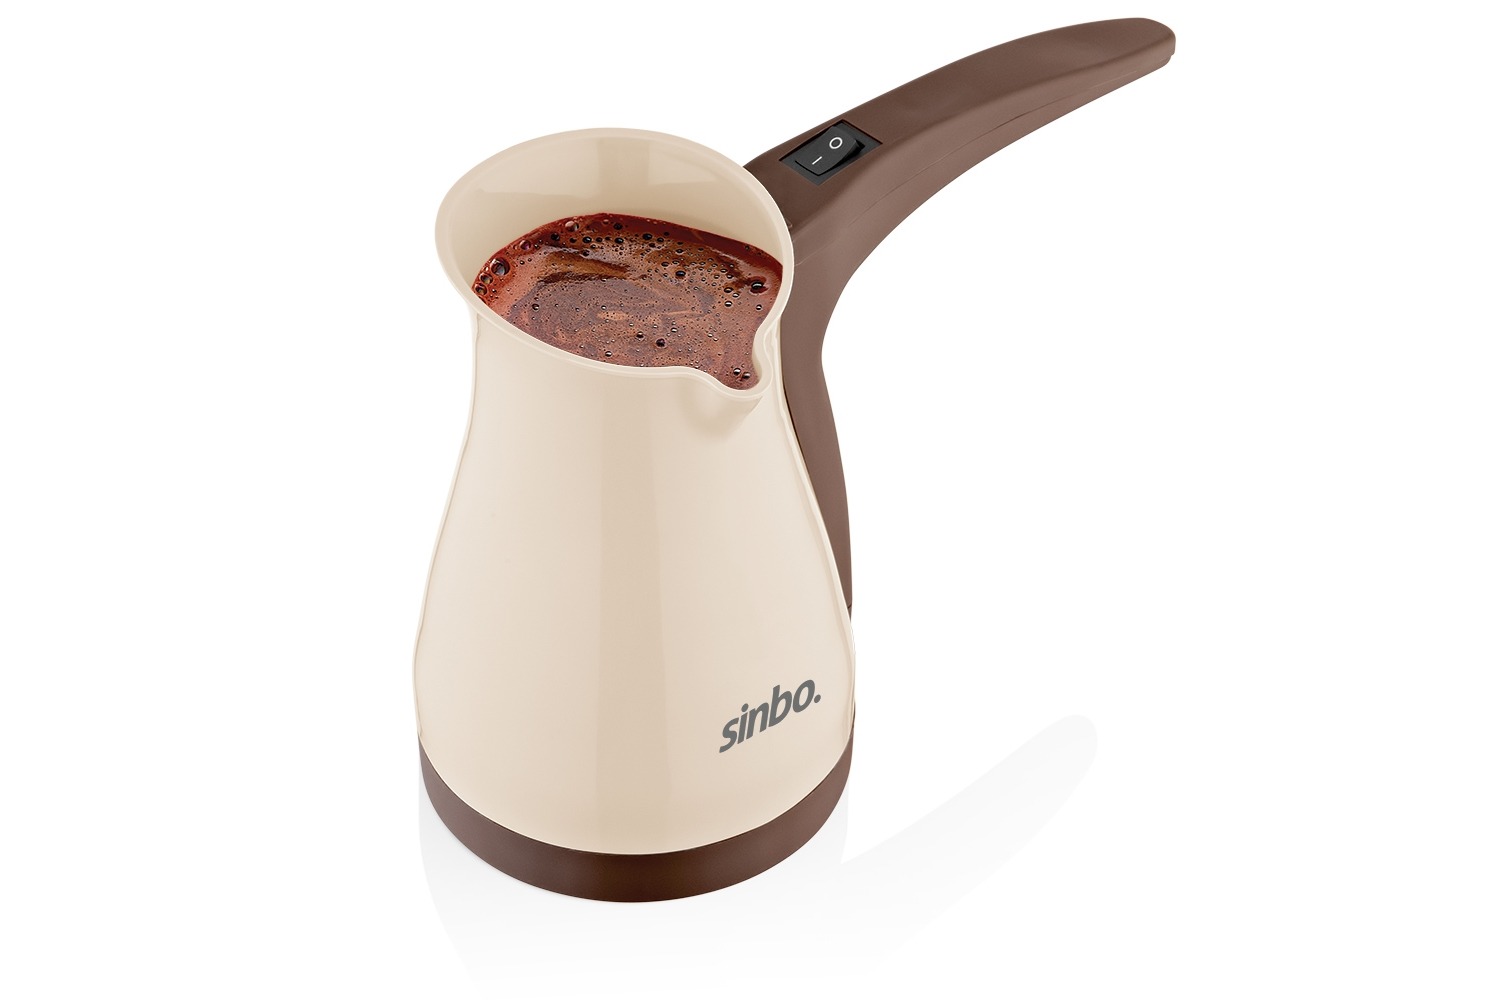 https://turkishbox.com/wp-content/uploads/2020/03/Sinbo-Electrical-Turkish-Coffee-Pot.jpg